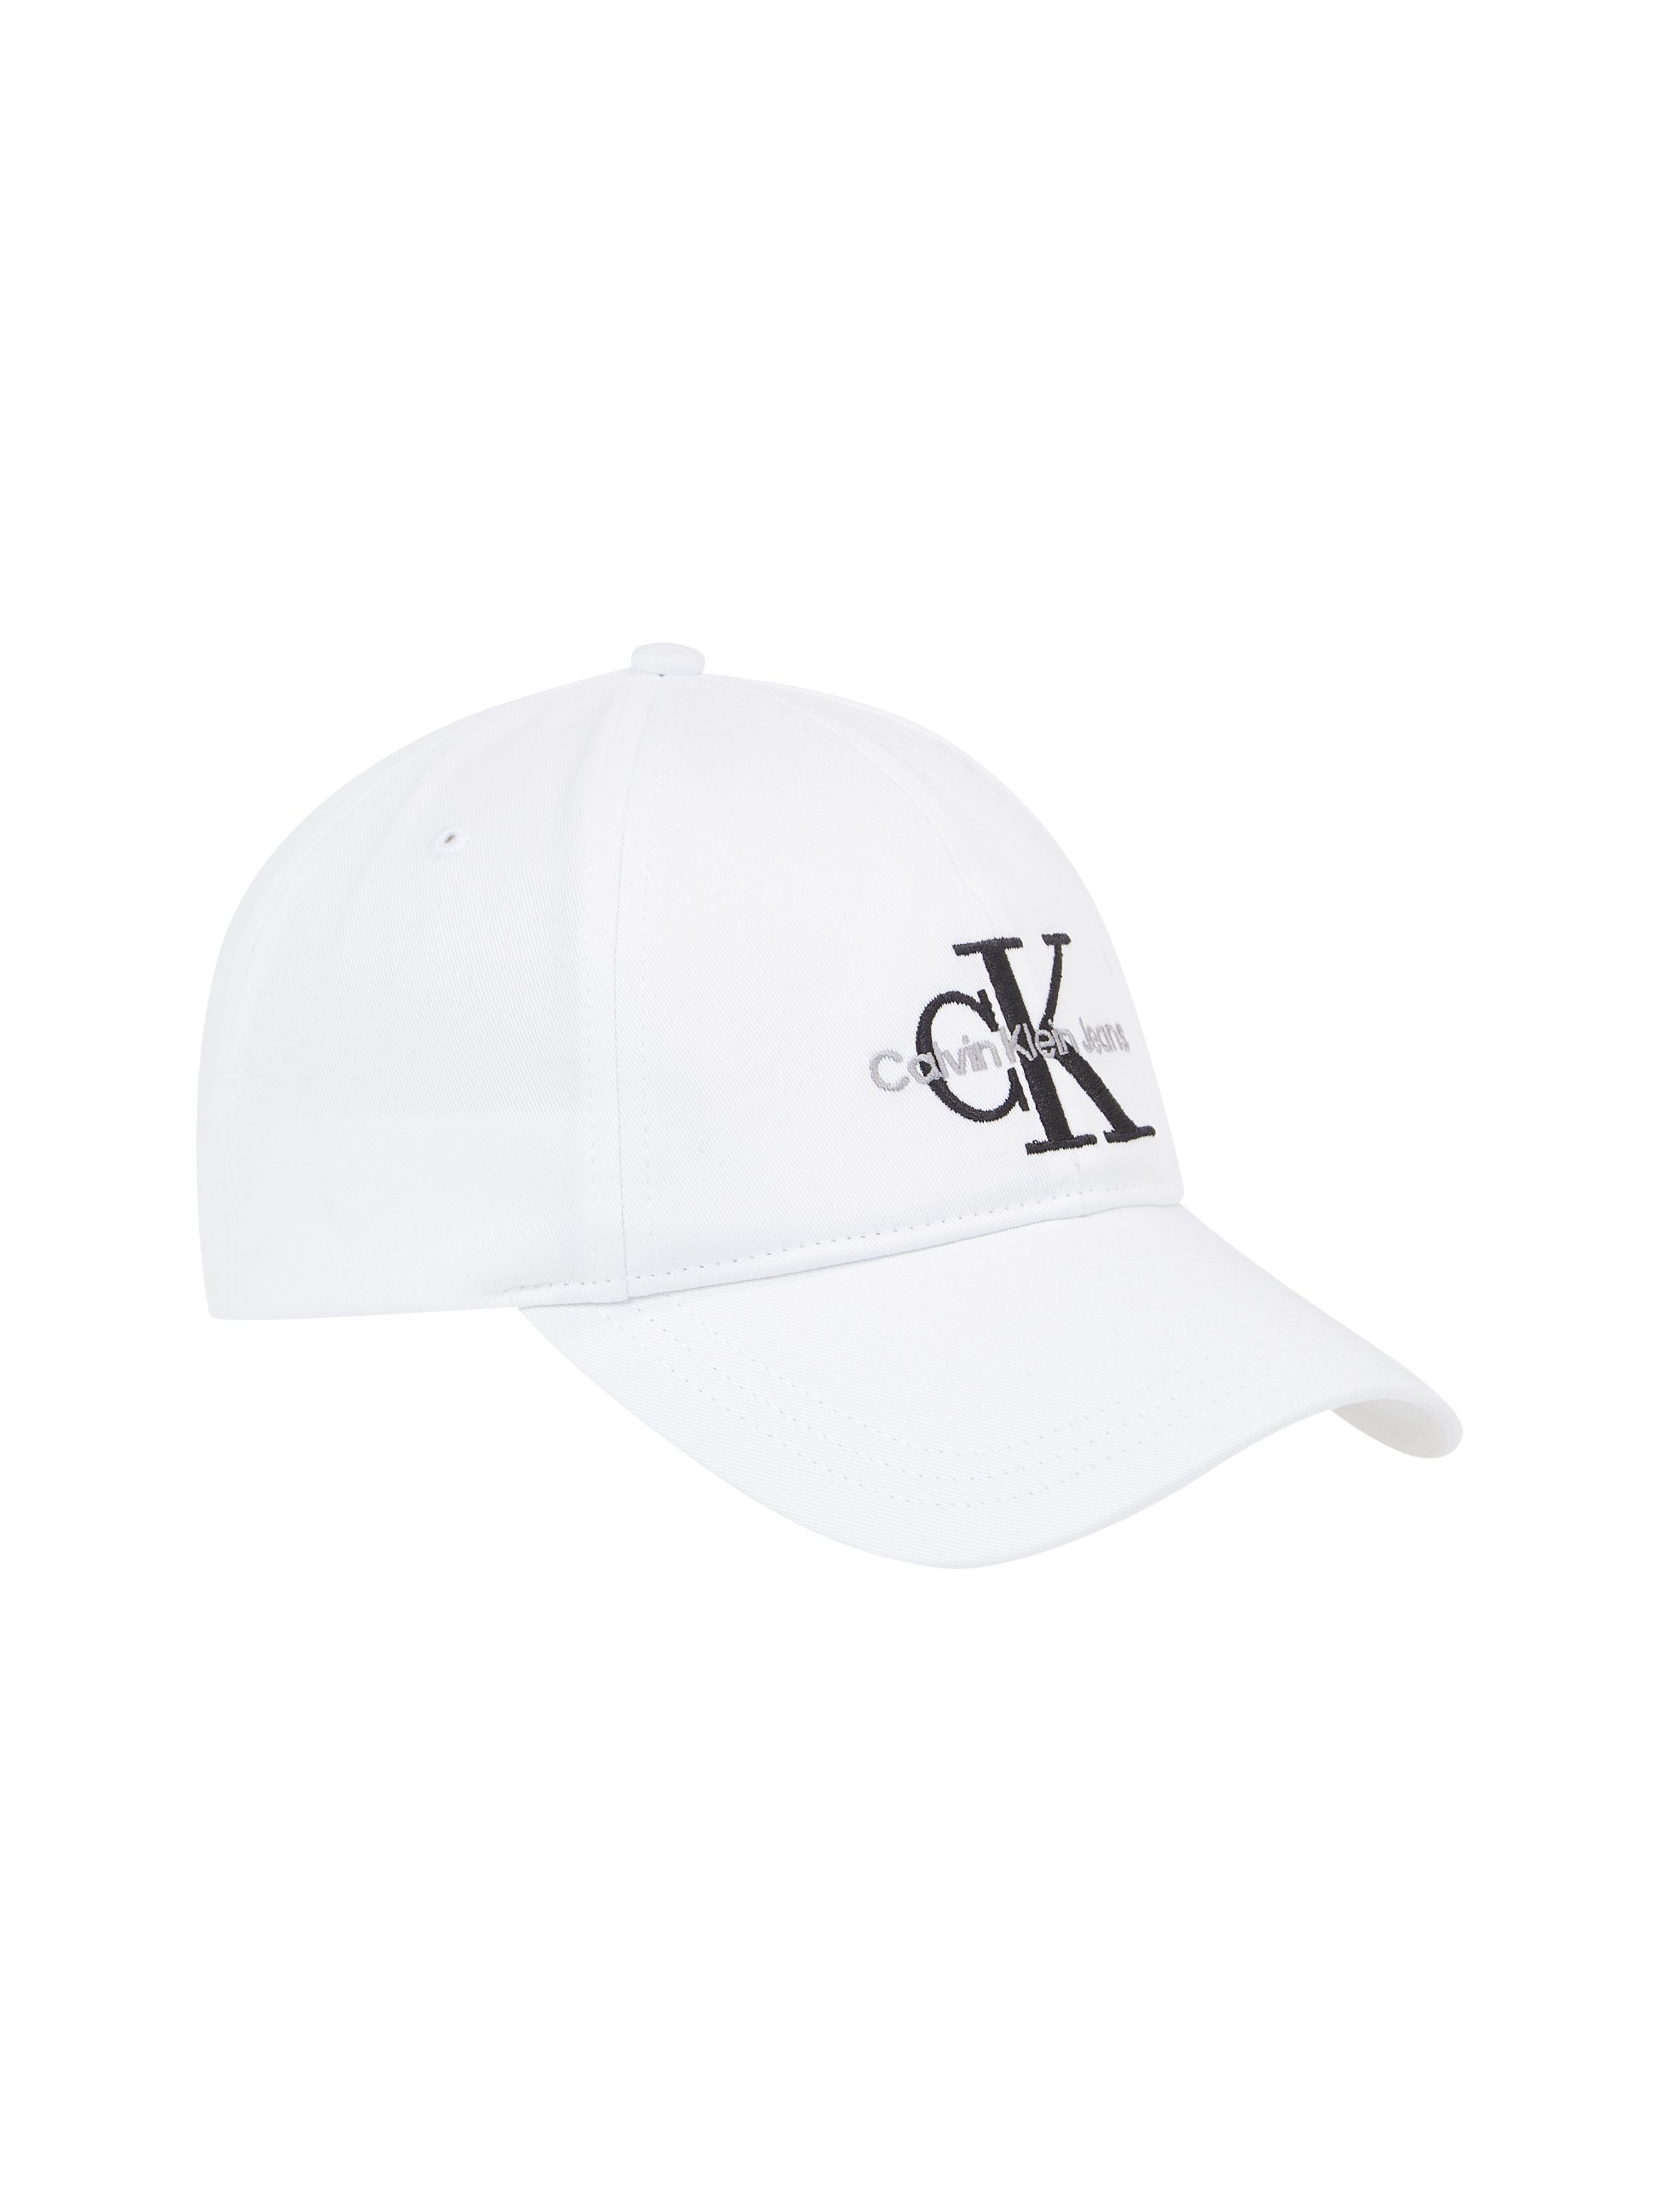 Calvin Klein Jeans Baseball MONOGRAM White Bright CAP Cap